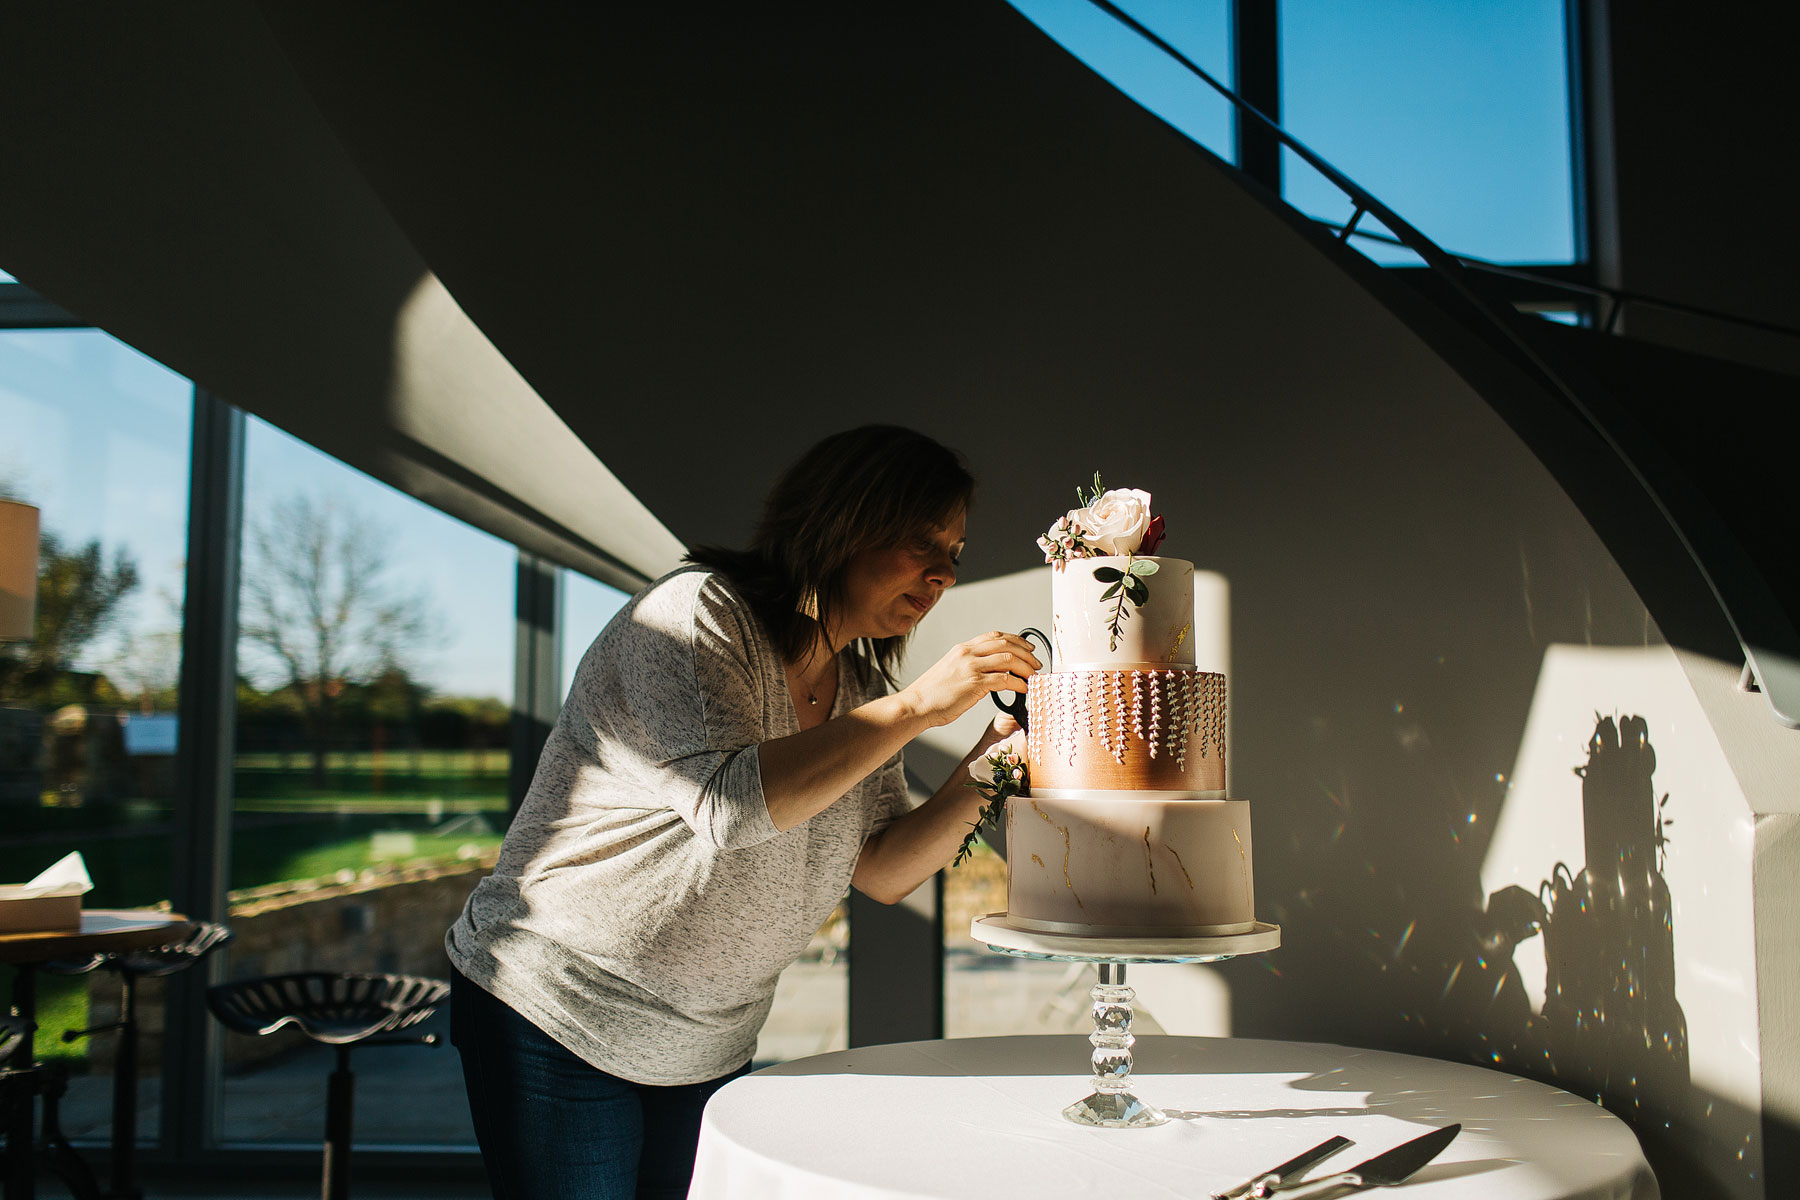 blackwell grange wedding venue with a cake